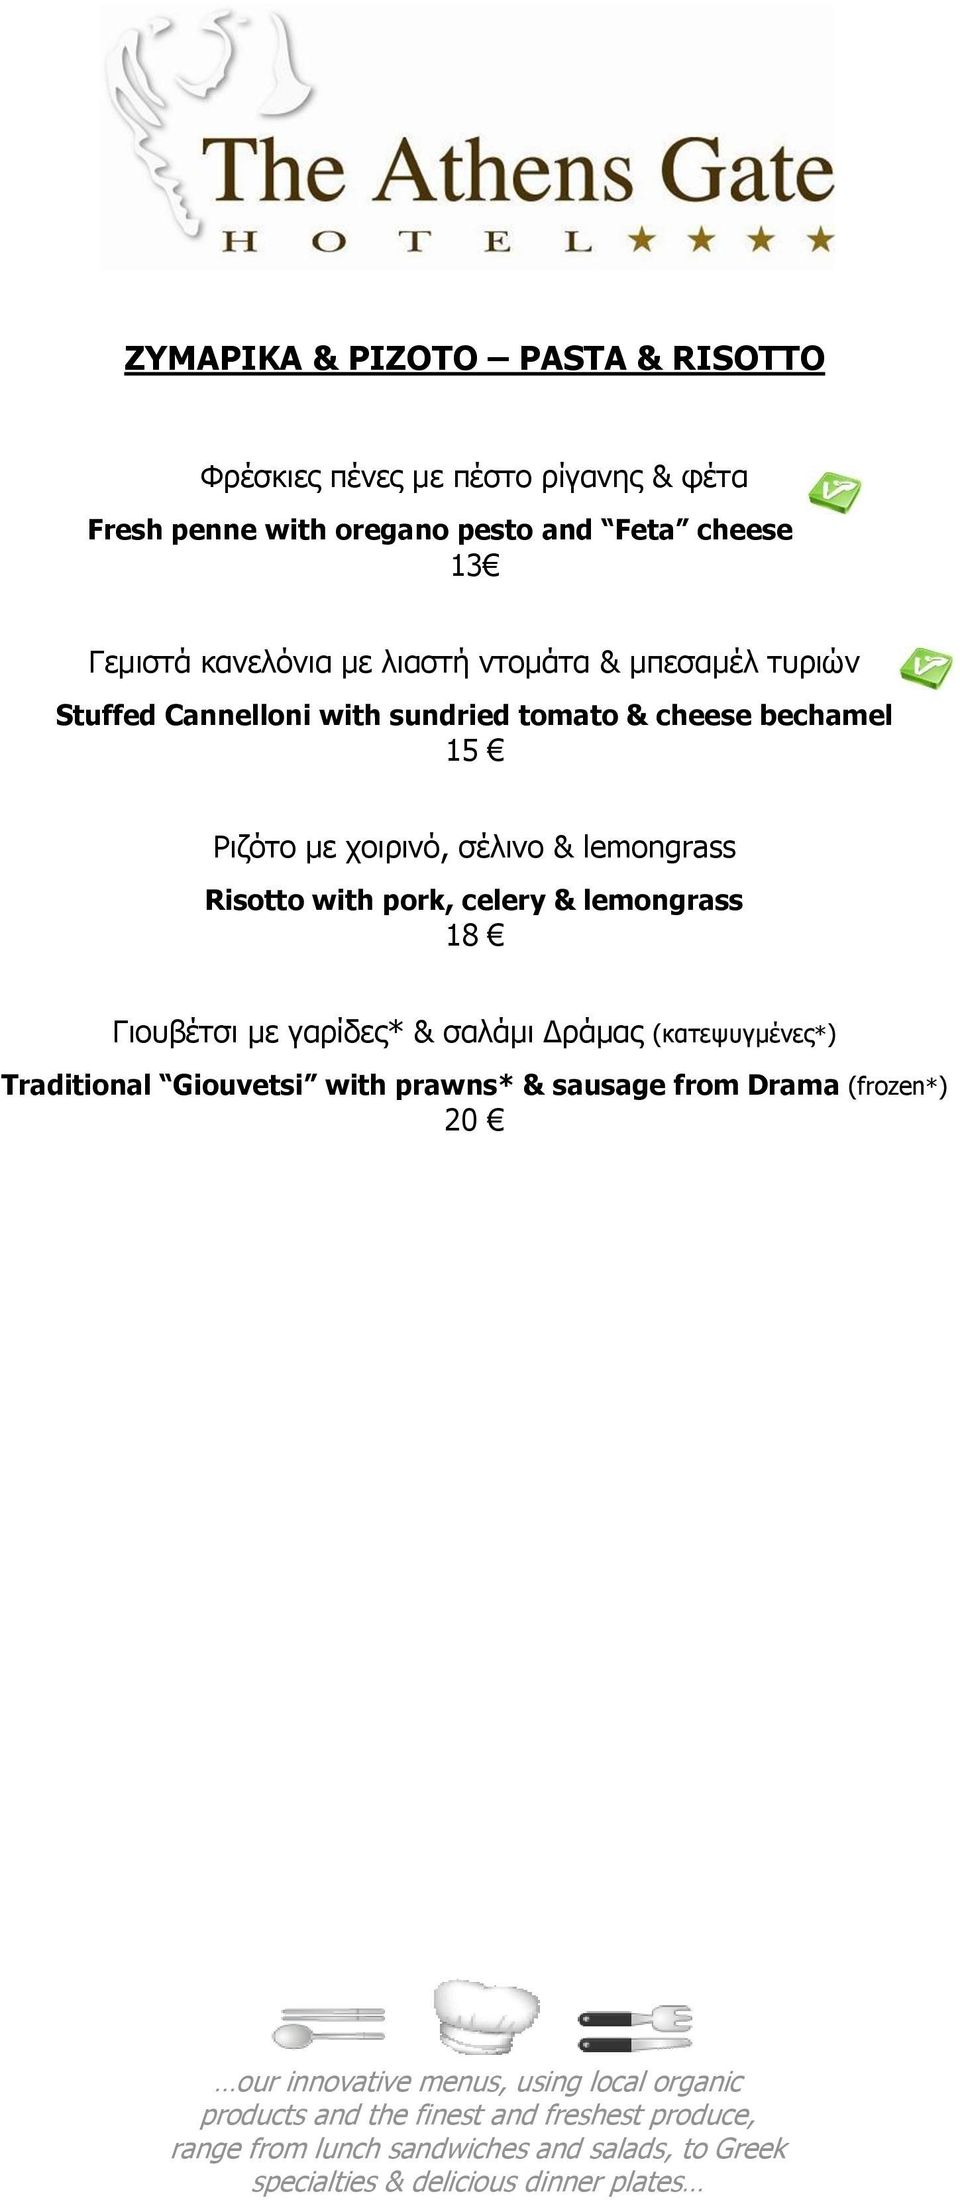 lemongrass 18 Γηνπβέηζη κε γαξίδεο* & ζαιάκη Γξάκαο (θαηεςπγκέλεο*) Traditional Giouvetsi with prawns* & sausage from Drama (frozen*) 20 our innovative